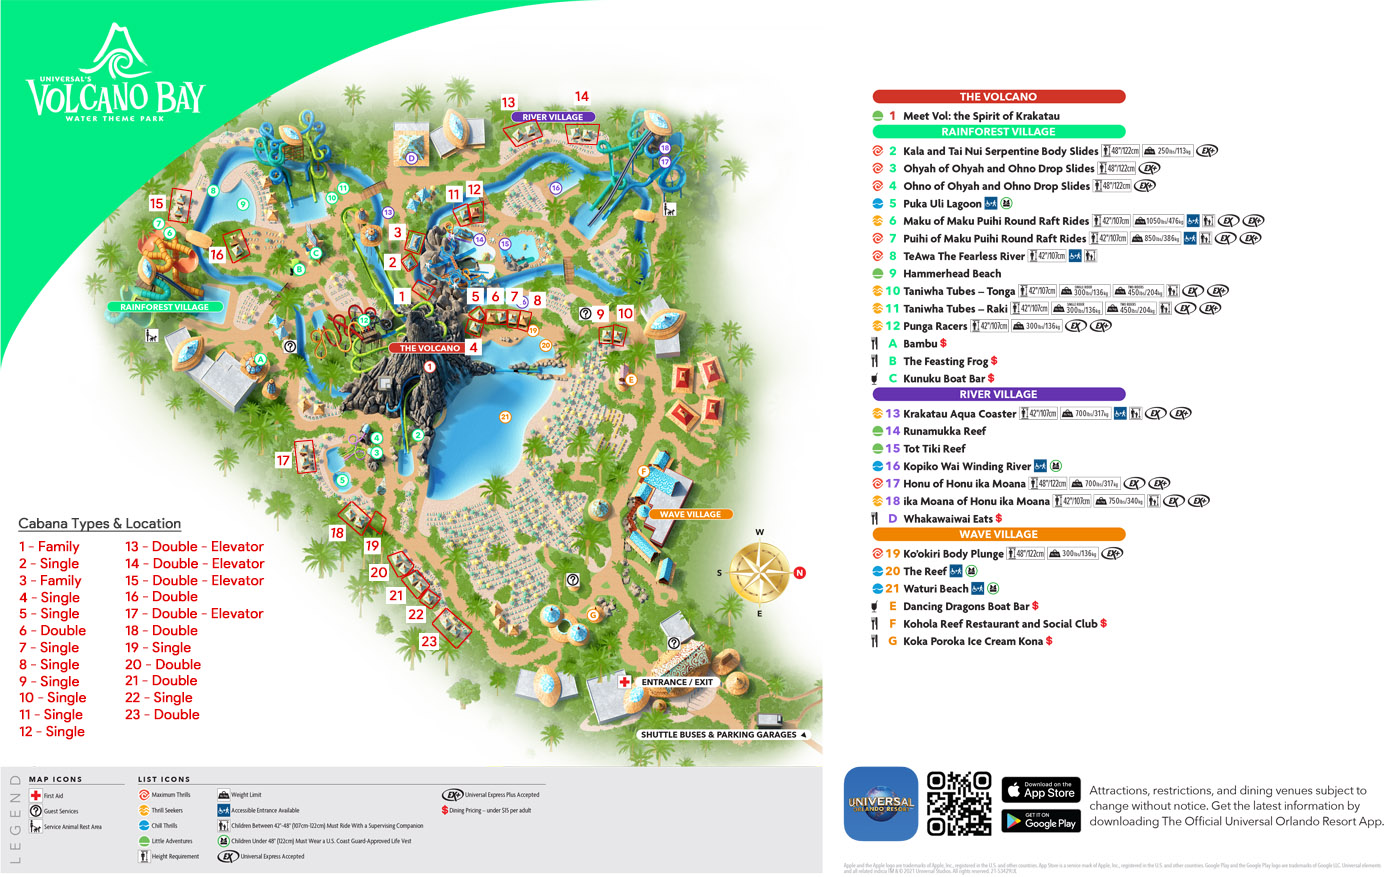 Universal Orlando Volcano Bay Water Park Map with Cabana Locations